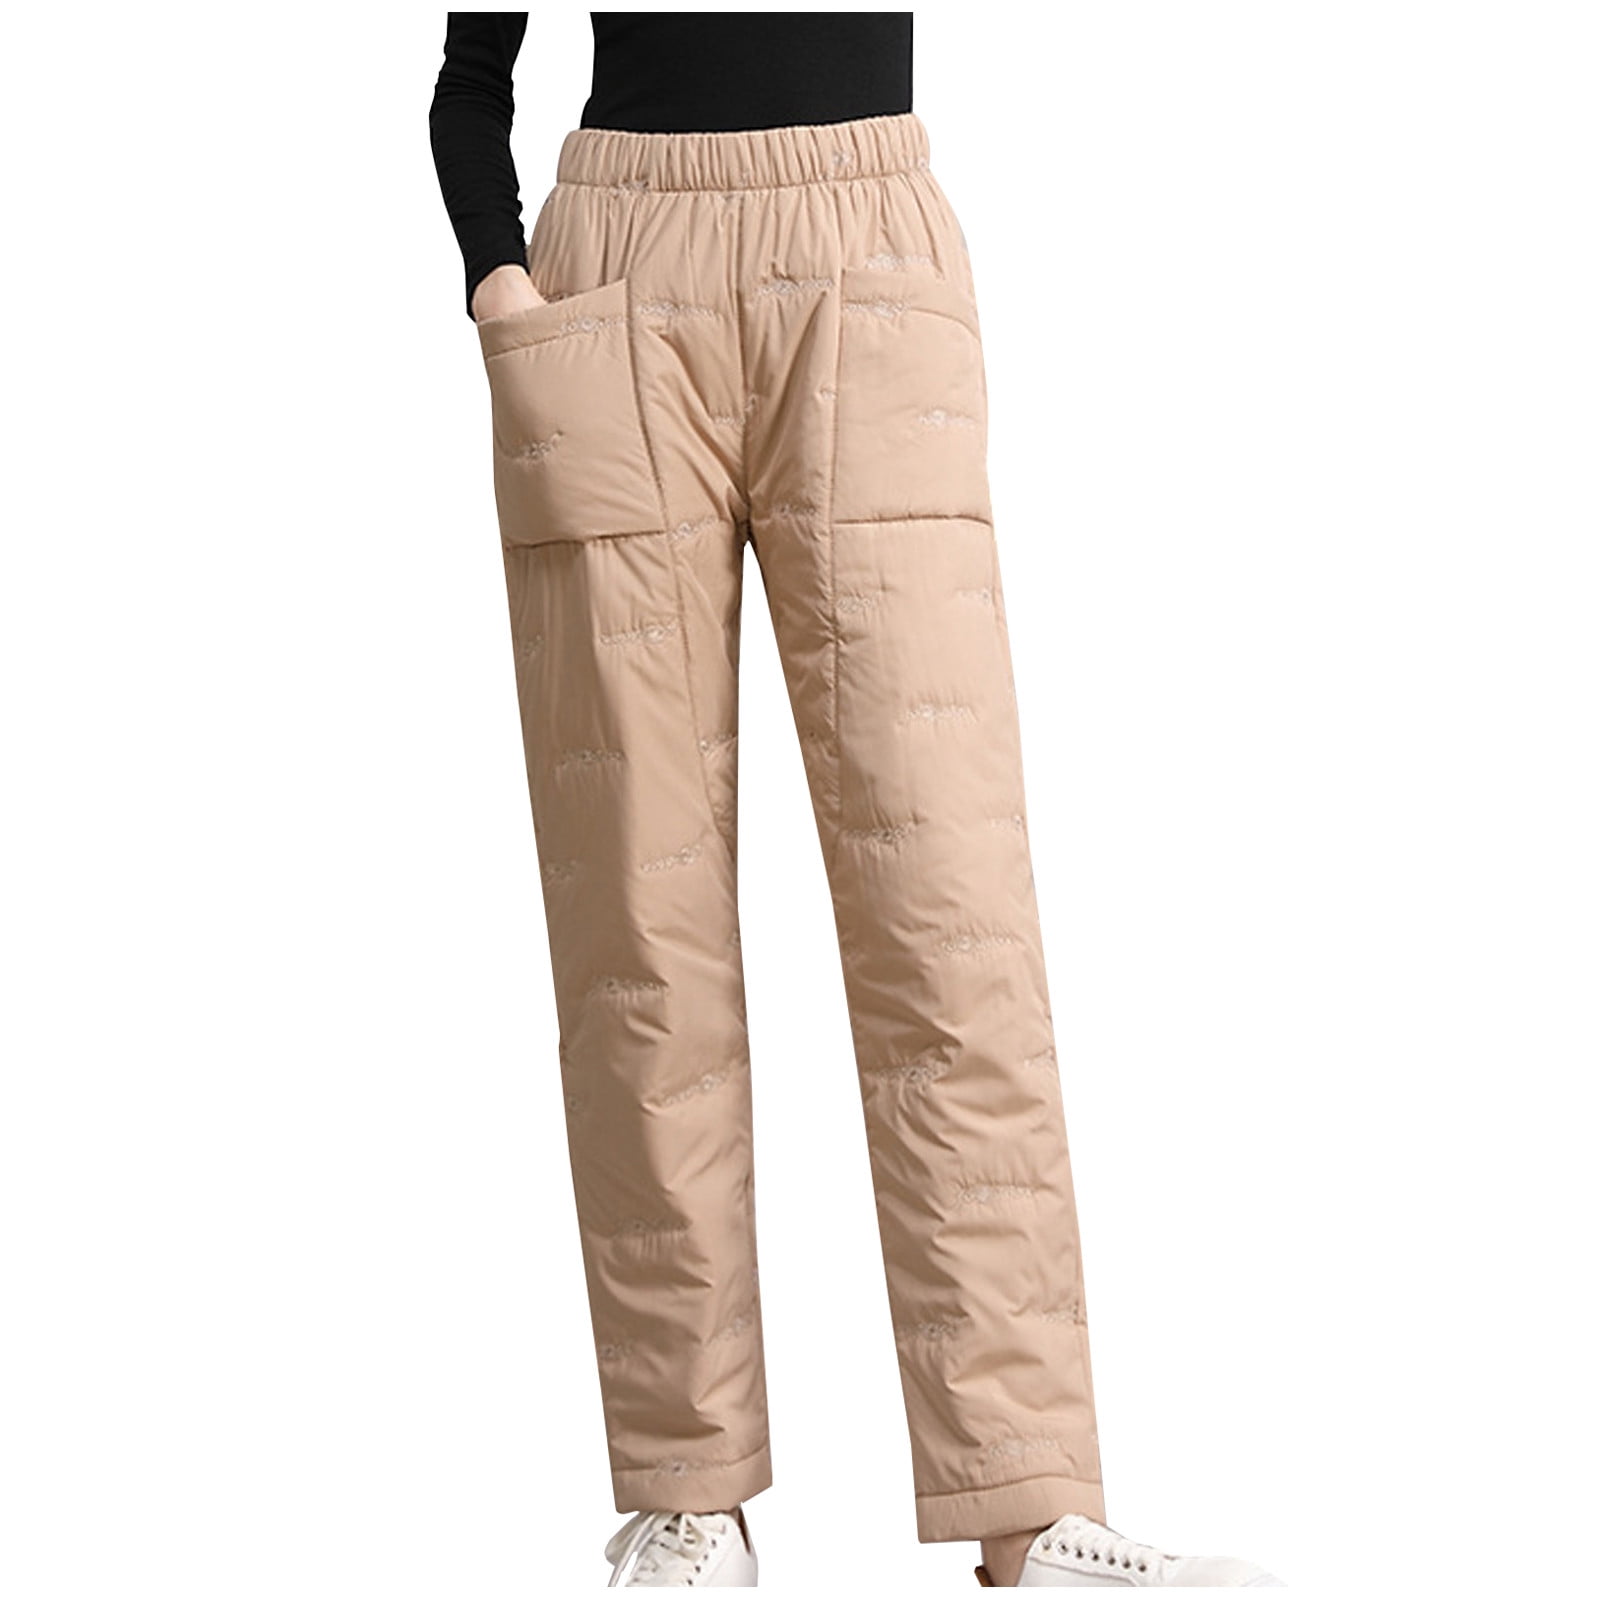 KIJBLAE Women's Bottoms Fashion Full Length Trousers Straight Leg Pants For  Girls Solid Color Comfy Lounge Casual Pants Khaki XL - Walmart.com